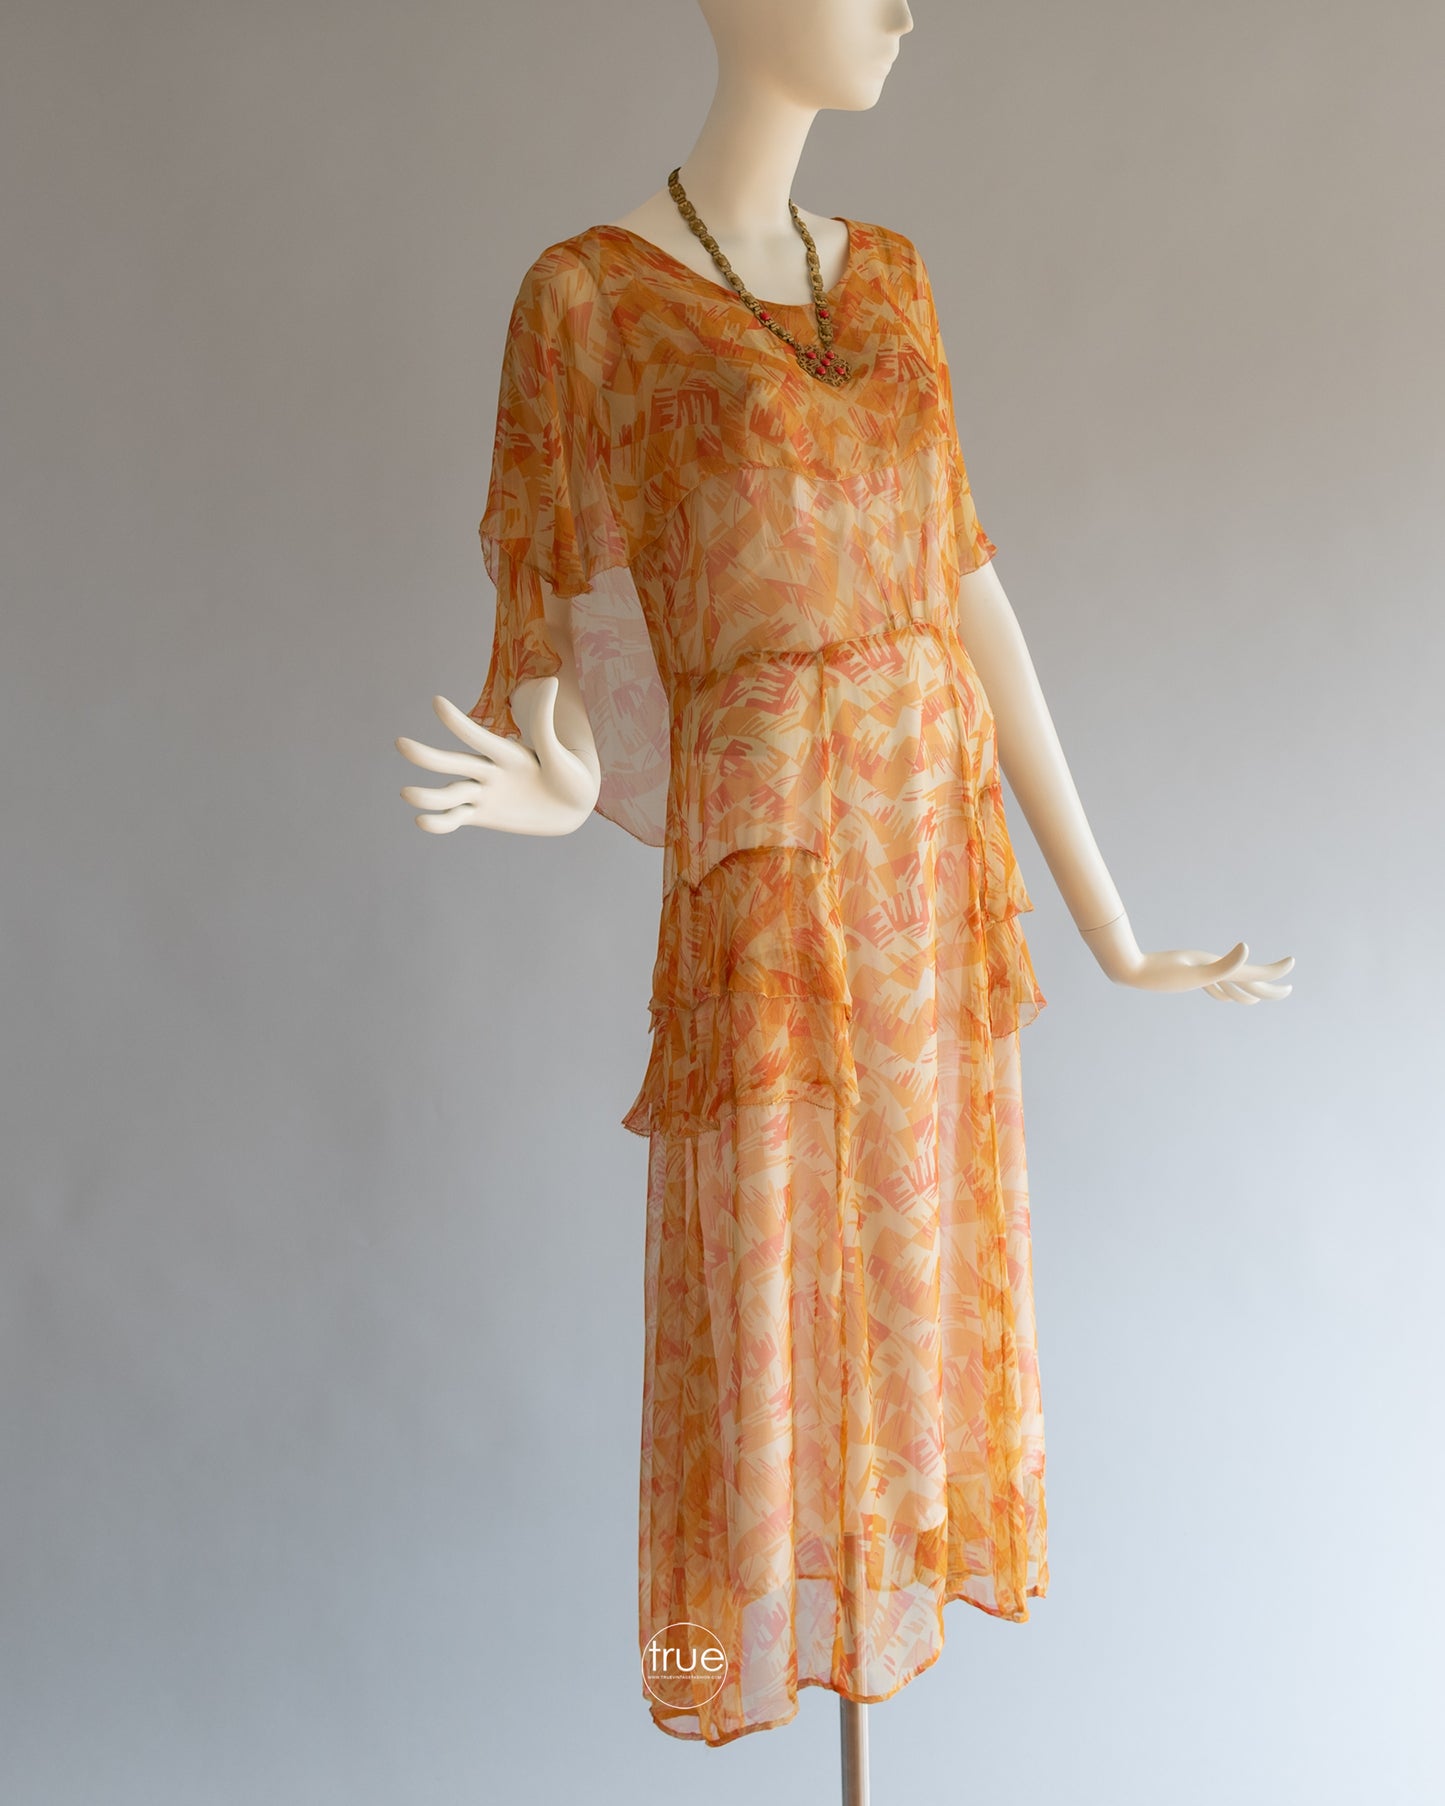 1920's dress